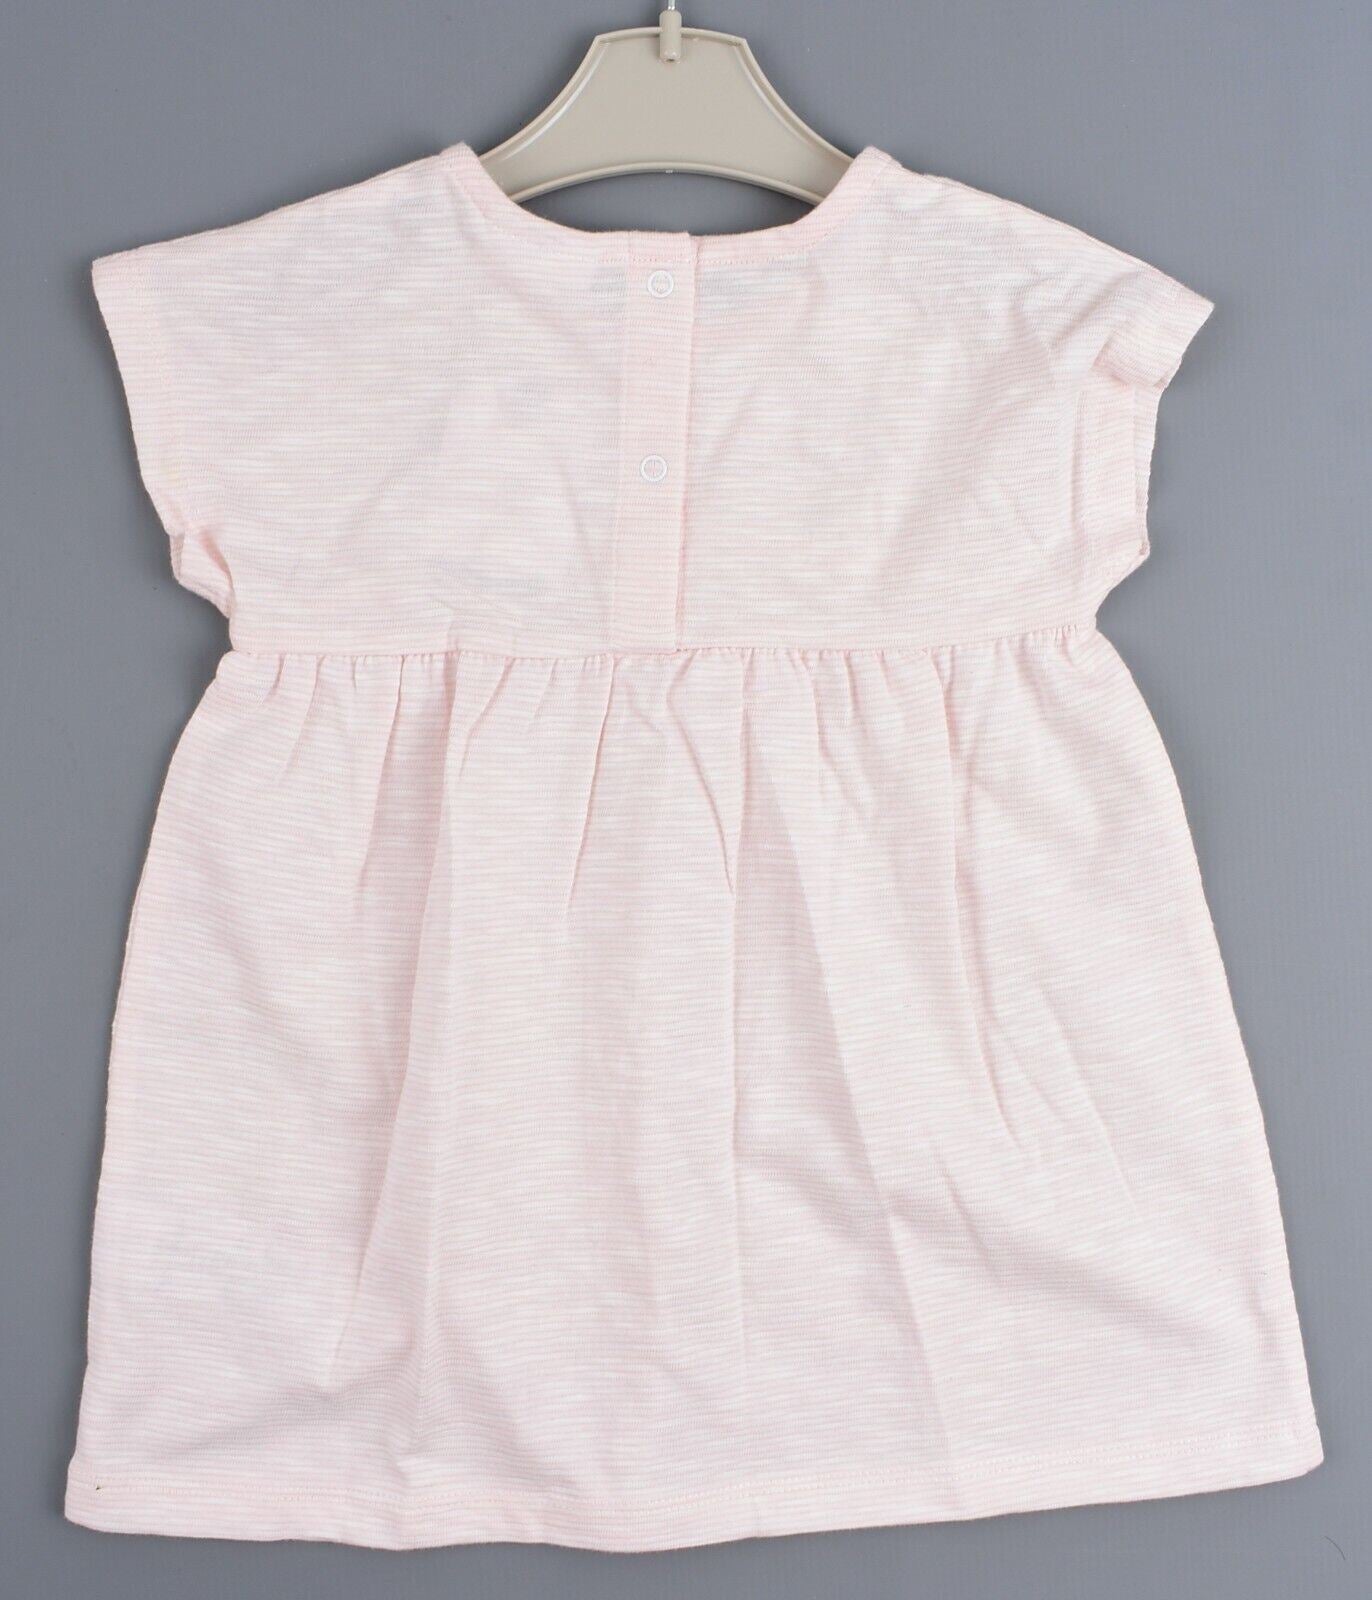 NEXT Bundle of 2x Baby Items, White Bodysuit & Pink Dress, size 6-9 months